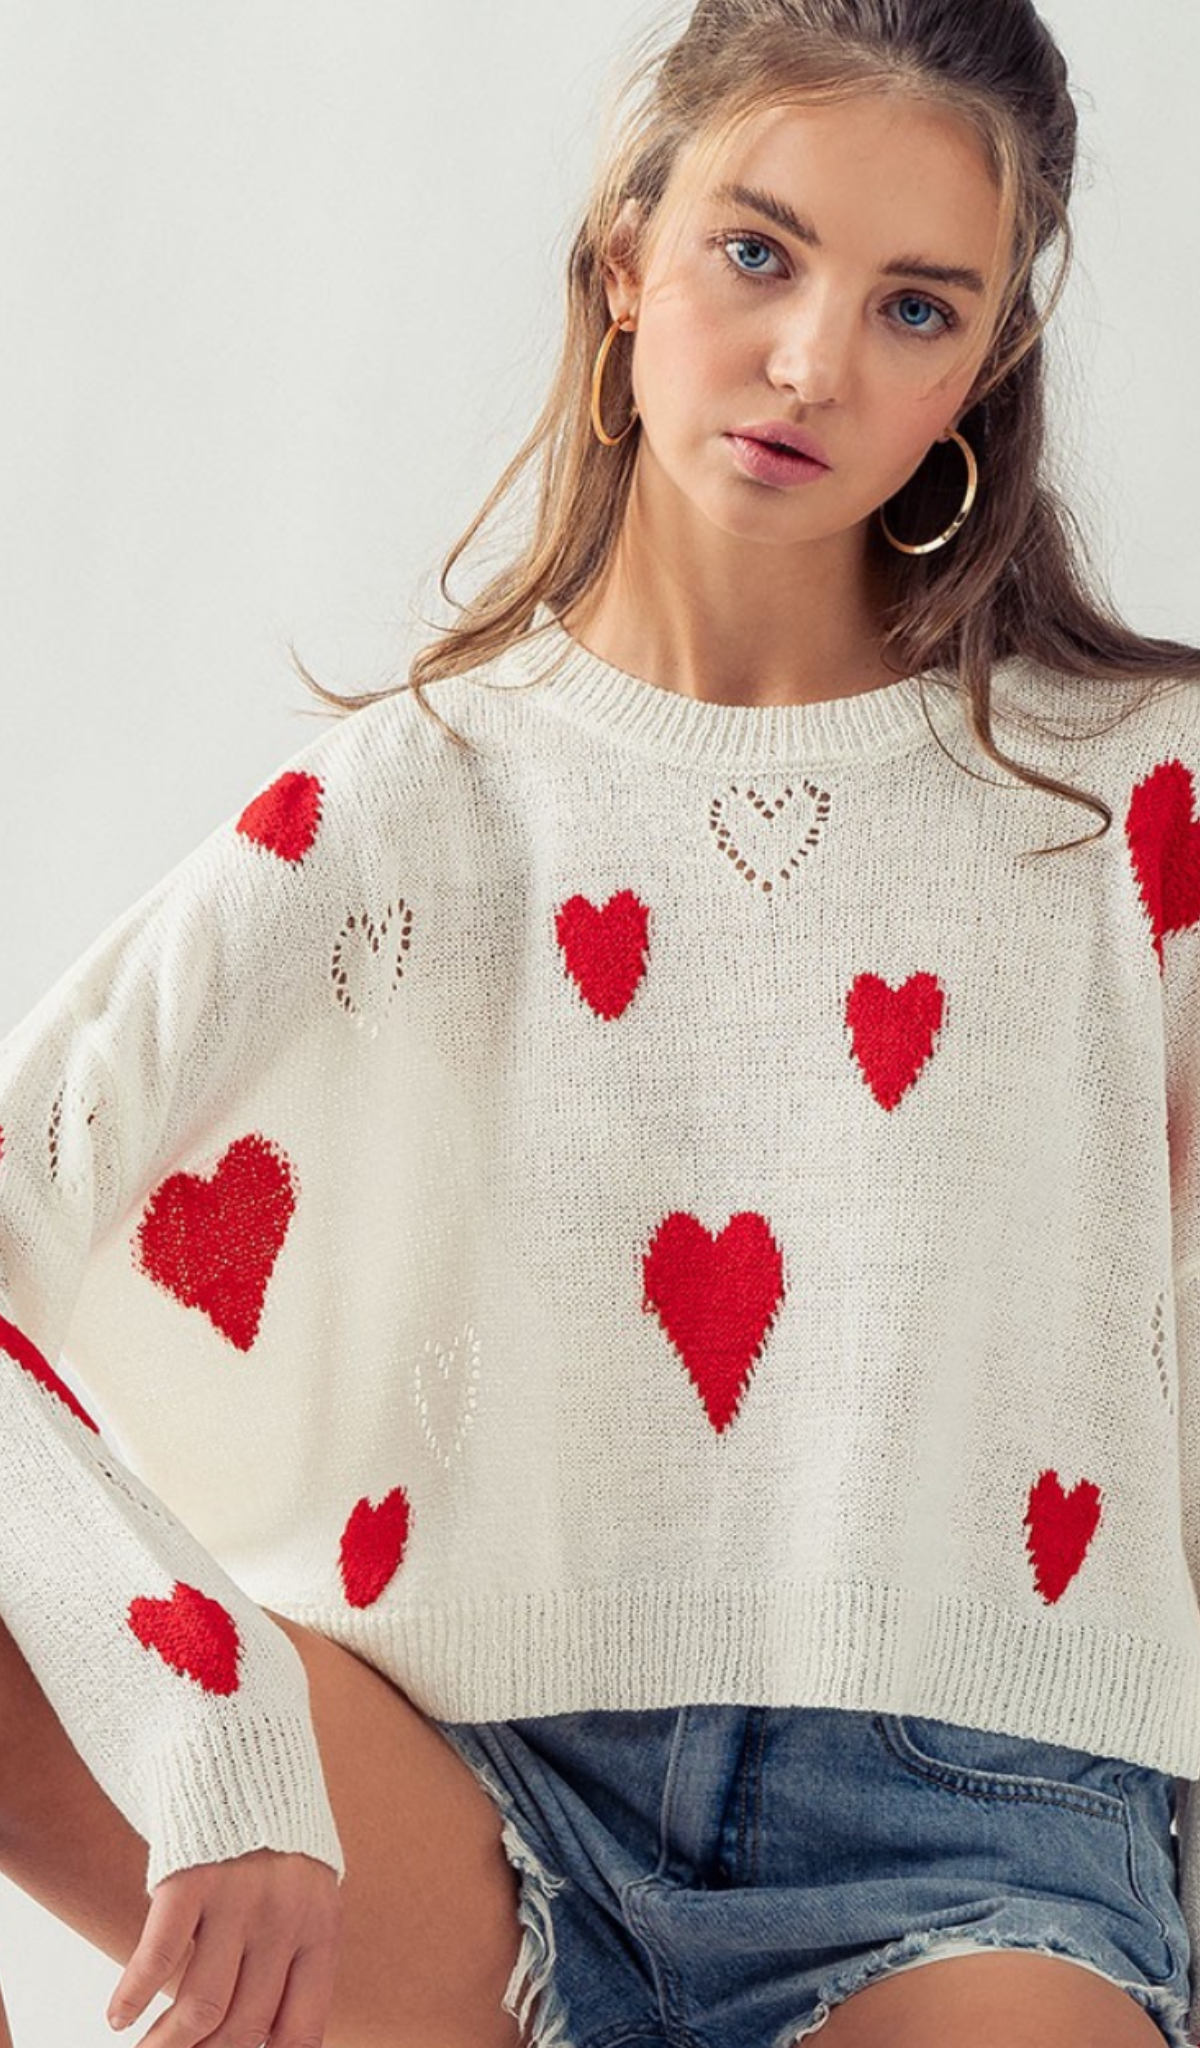 Queen of Hearts Light-Weight Sweater